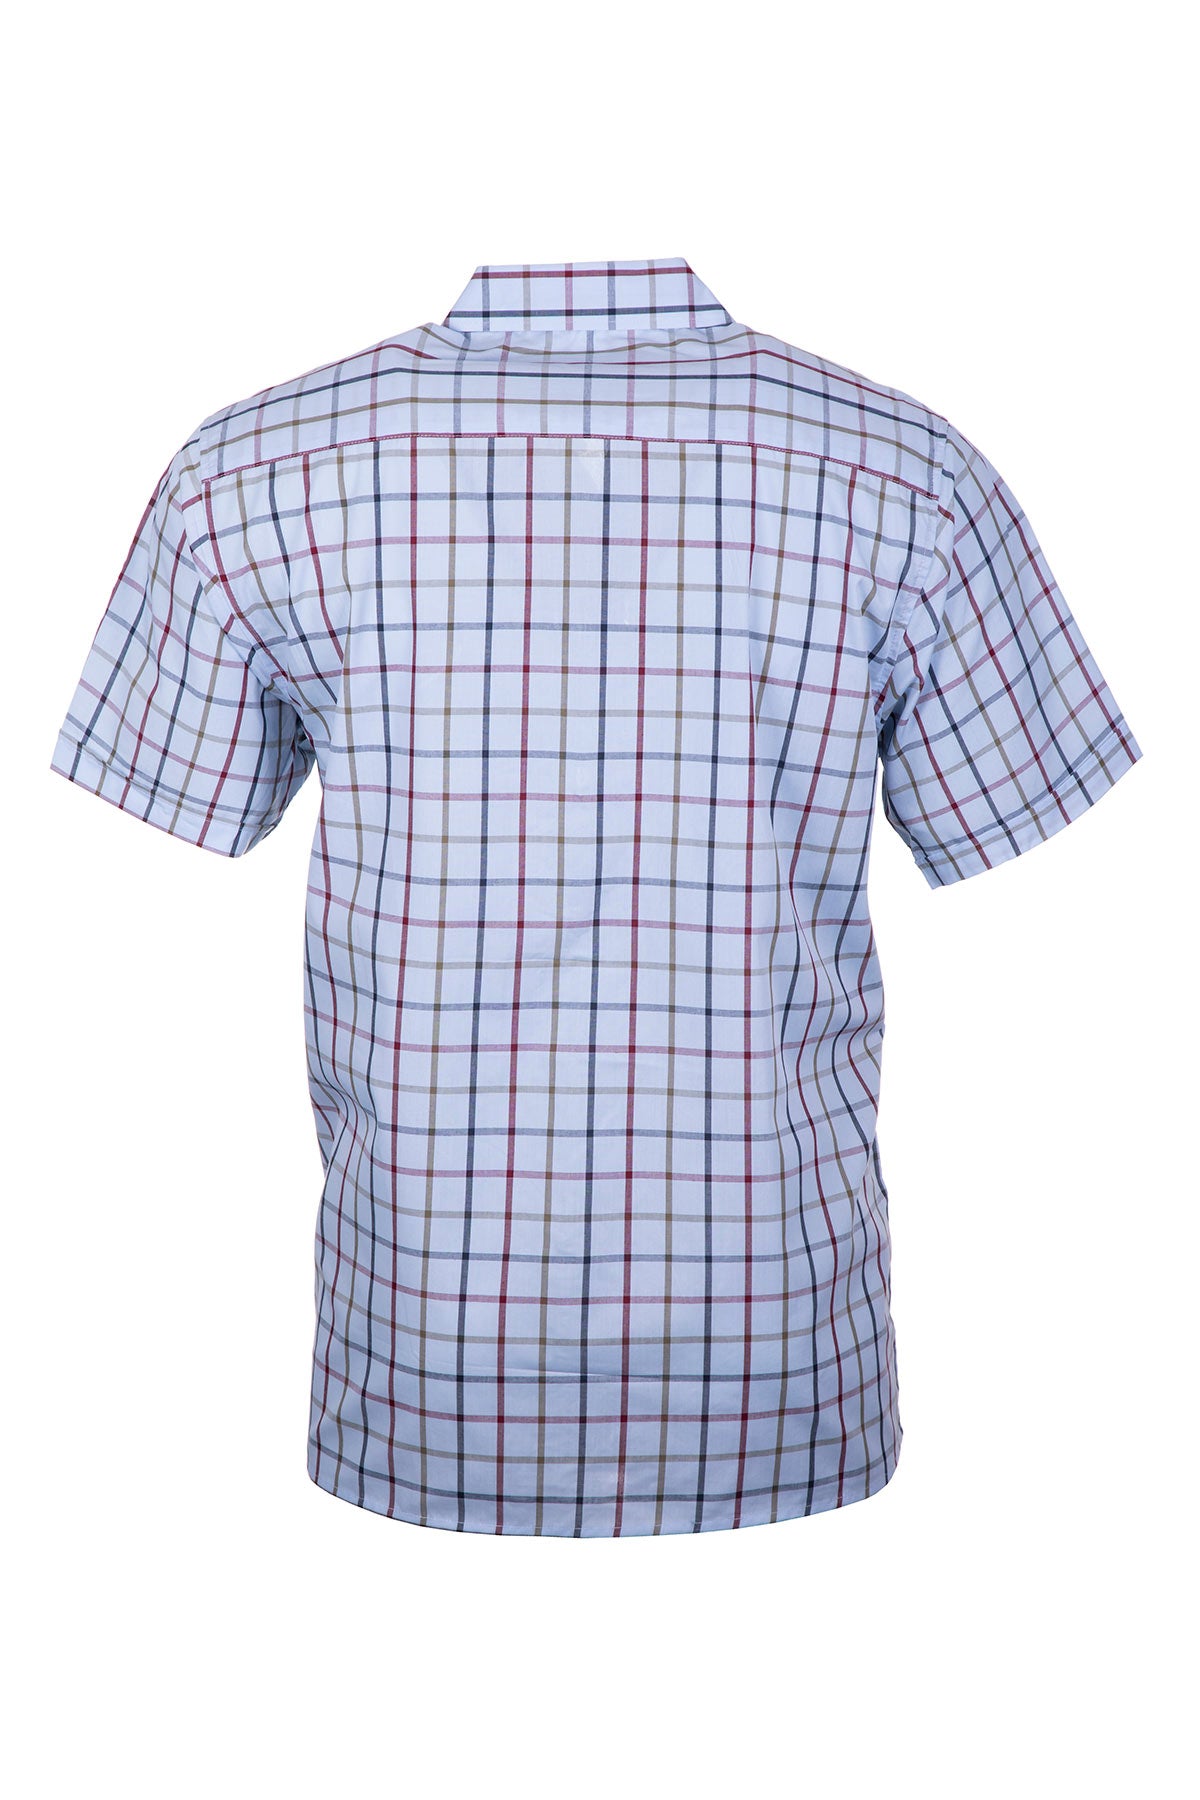 Mens Short Sleeve Check Shirt UK | Short Sleeve Checked Shirt | Rydale